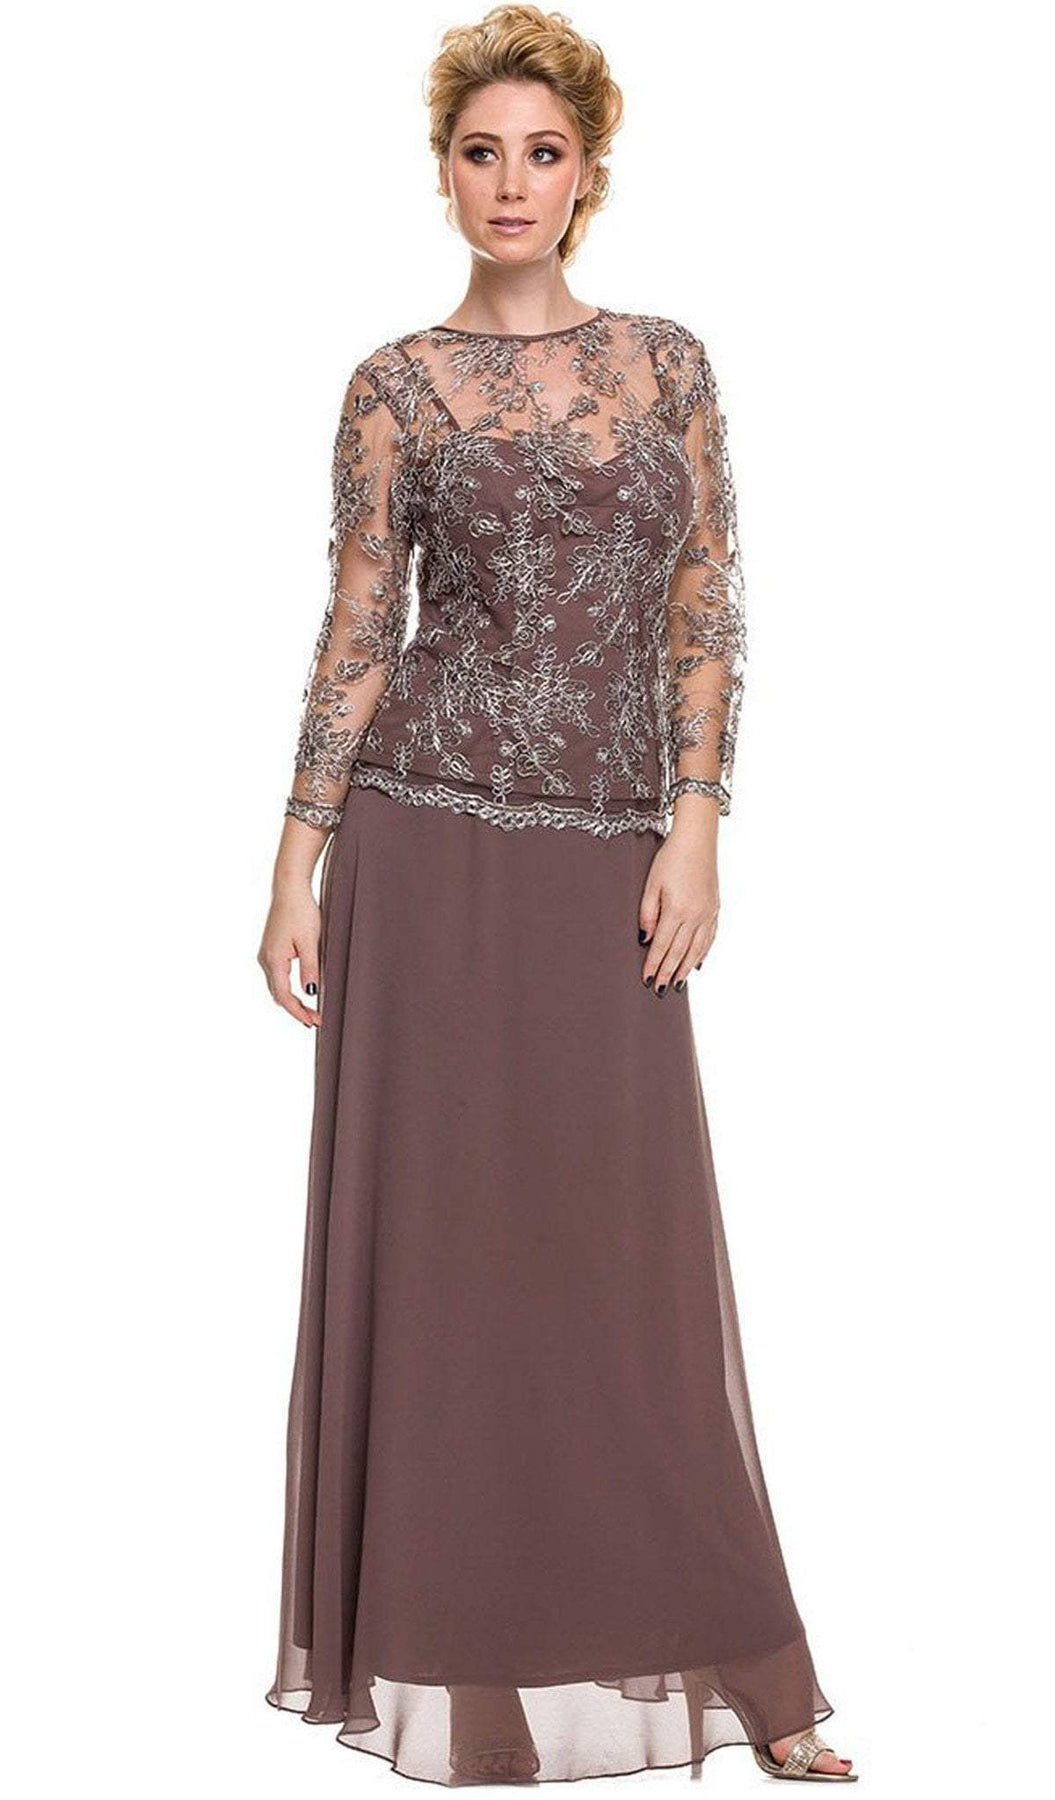 Nox Anabel - 5096 Sheer Lace Jewel Neck A-line Long Formal Dress Mother of the Bride Dresses M / Mocha